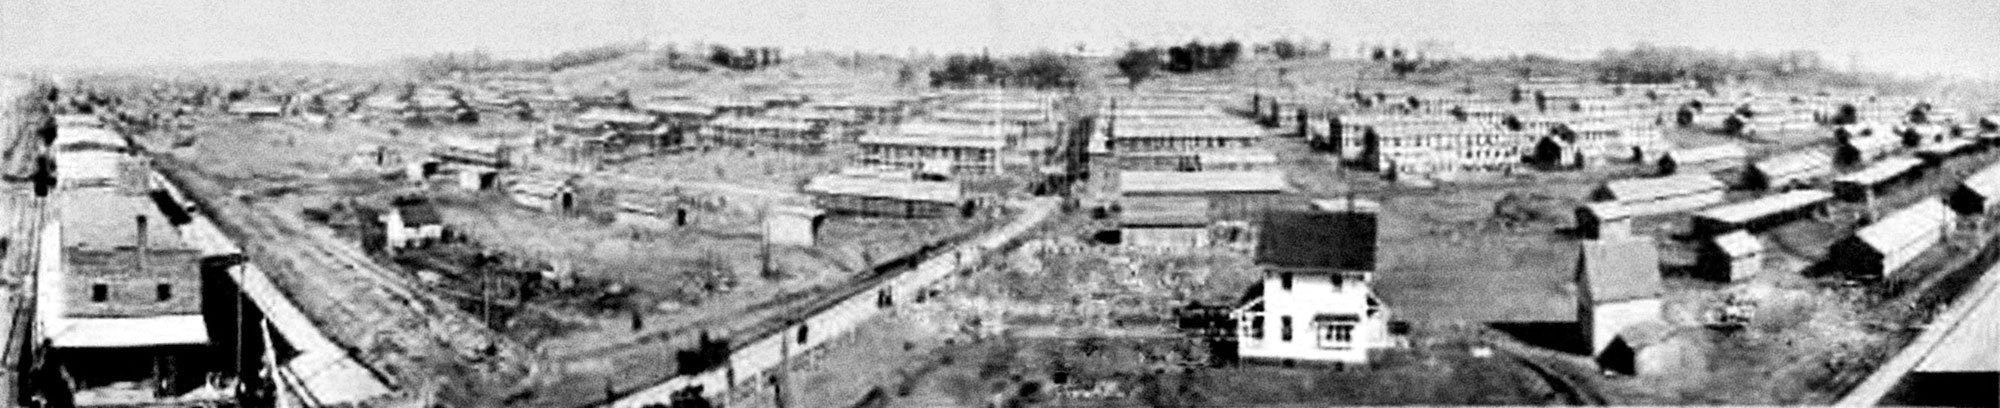 Panoramic composite photo of camp Dodge, Iowa, in 1917